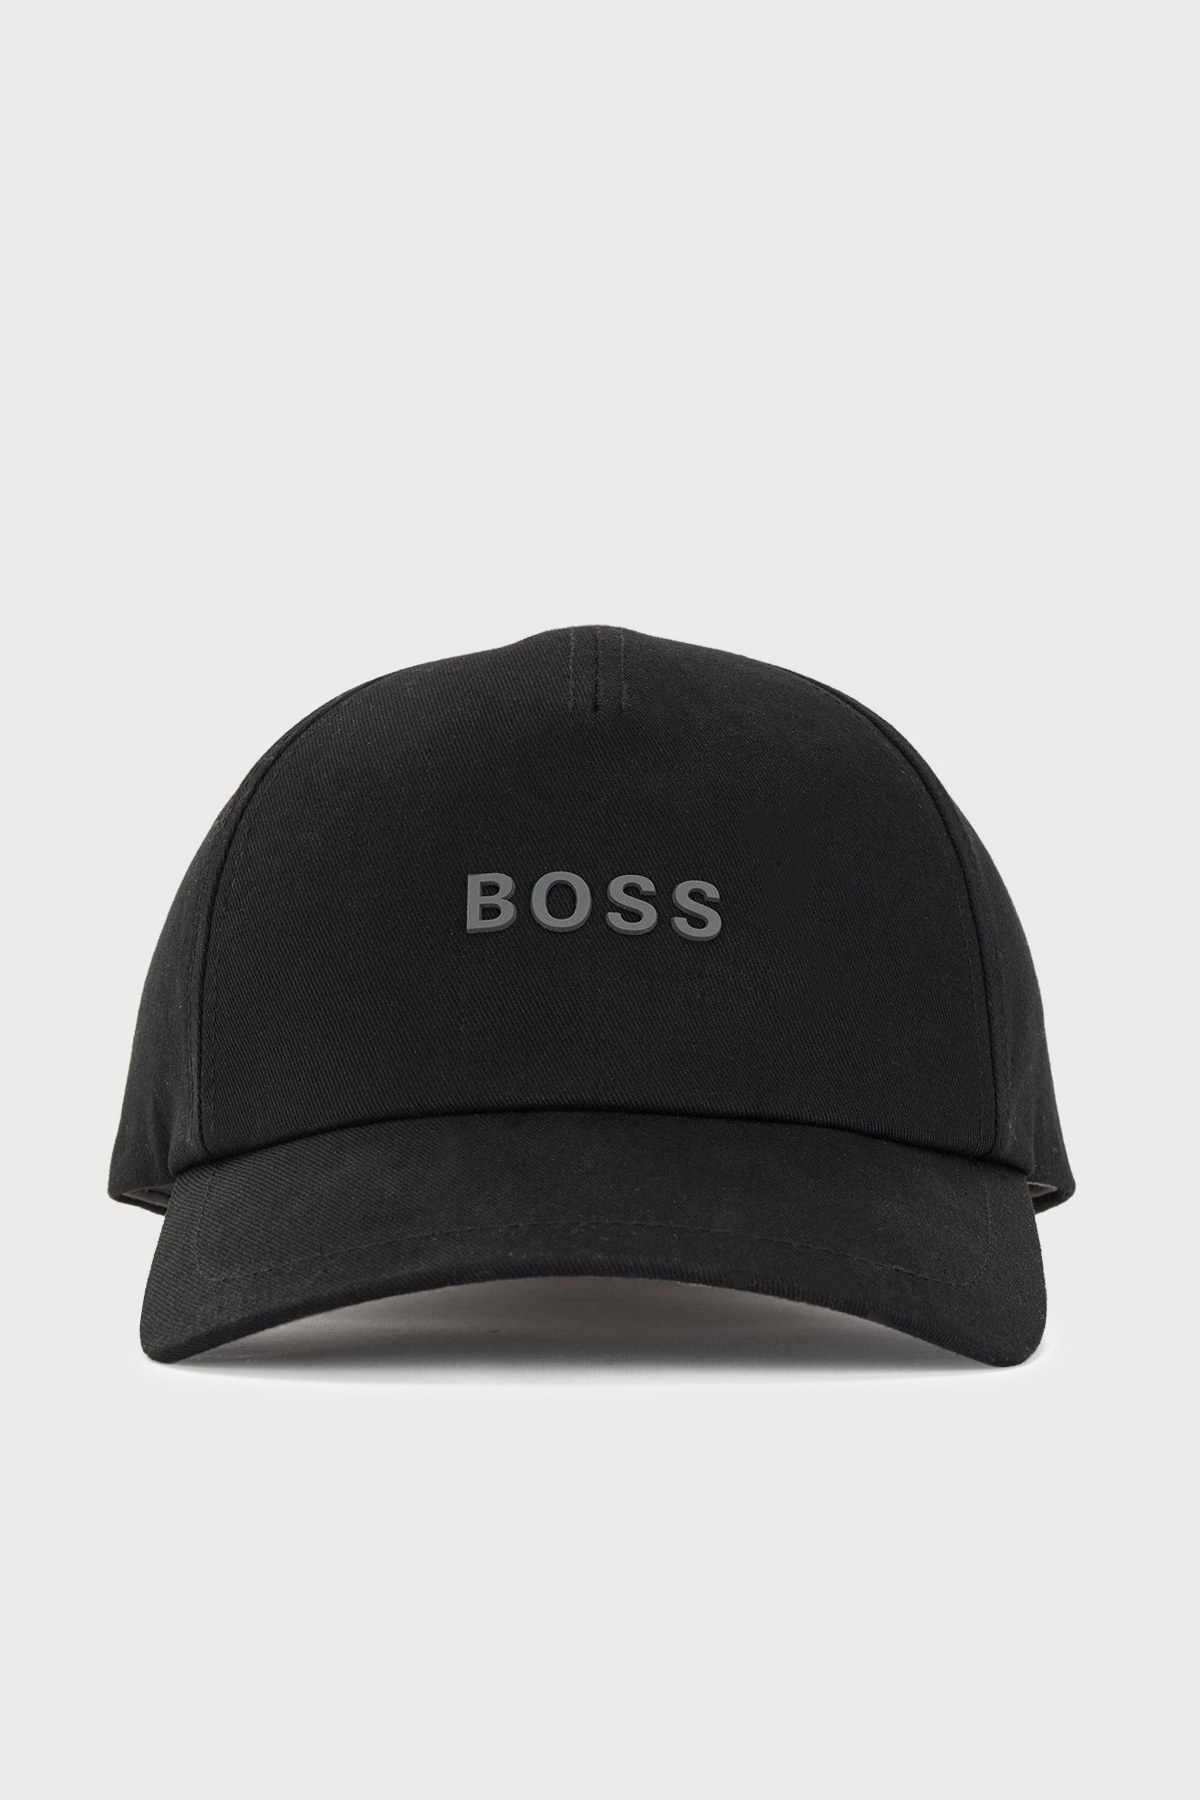 Boss Logo Detaylı Erkek Şapka 50462830 001 SİYAH